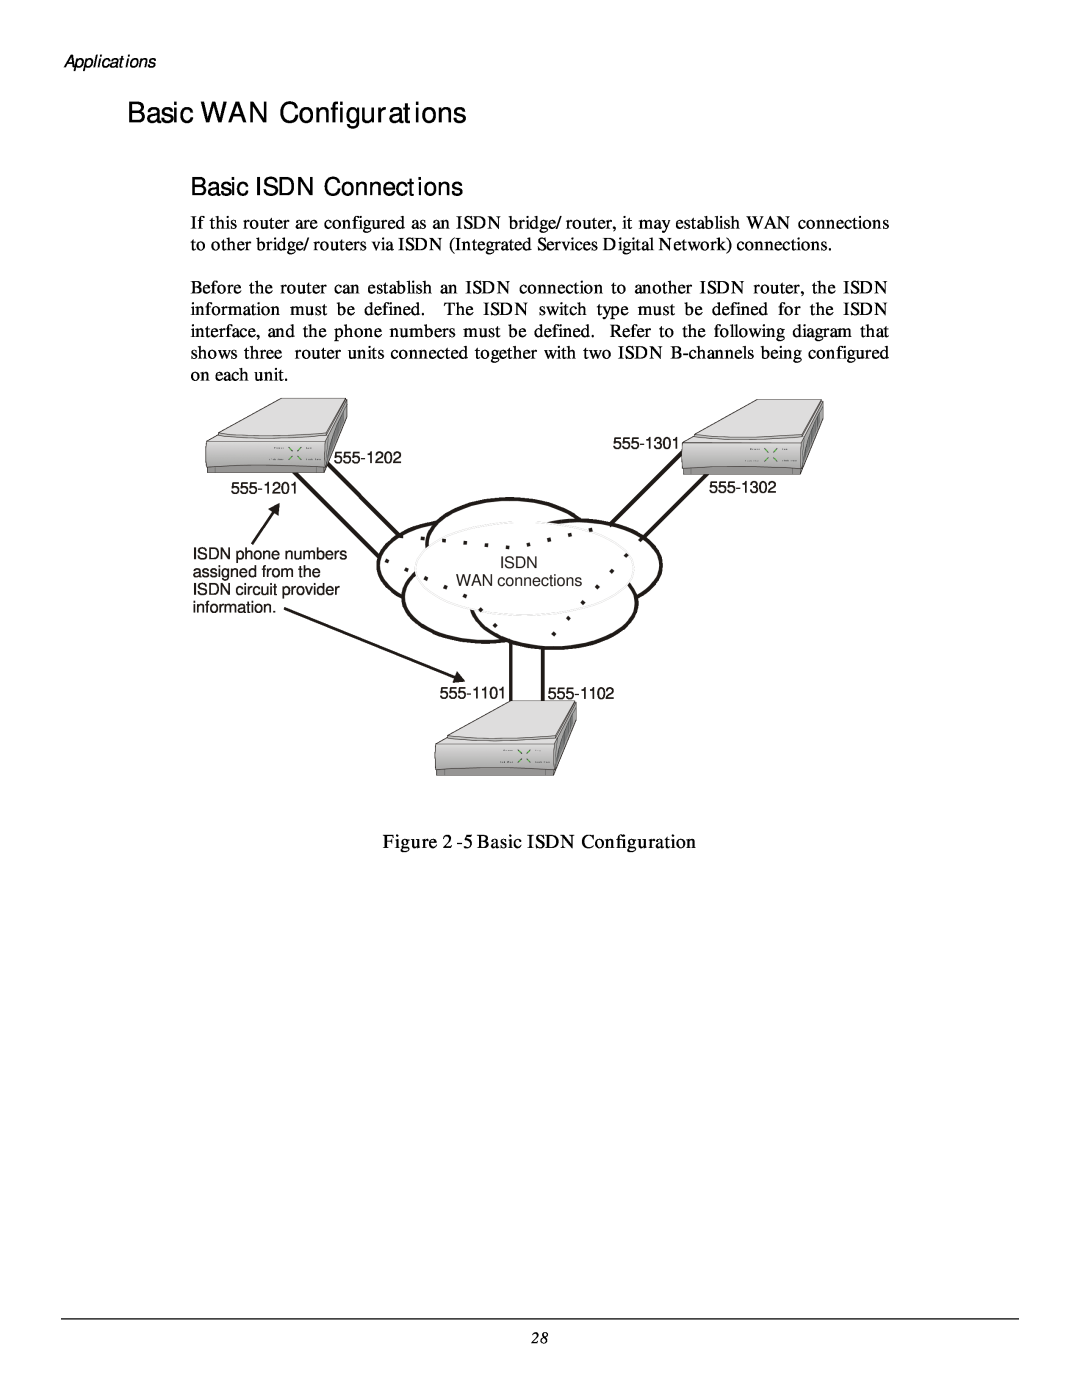 Black Box LR5100A-T, LR5200A-R2 Basic WAN Configurations, Basic ISDN Connections, 5 Basic ISDN Configuration, Applications 